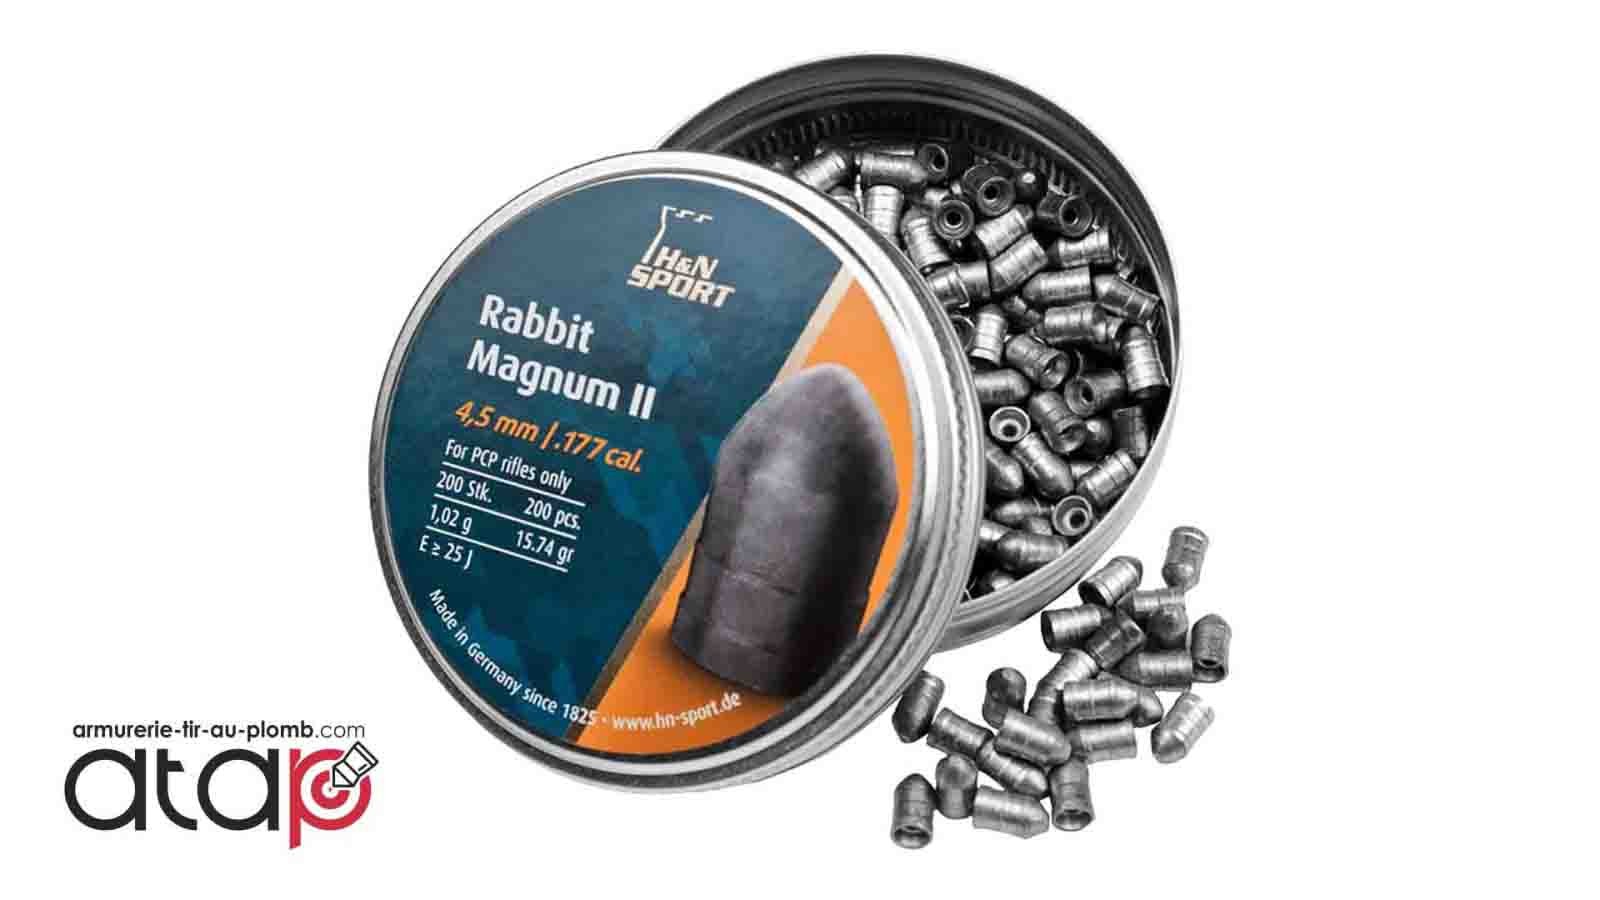 Plombs H&N Rabbit Magnum II - 4.5 mm - Plombs lourds